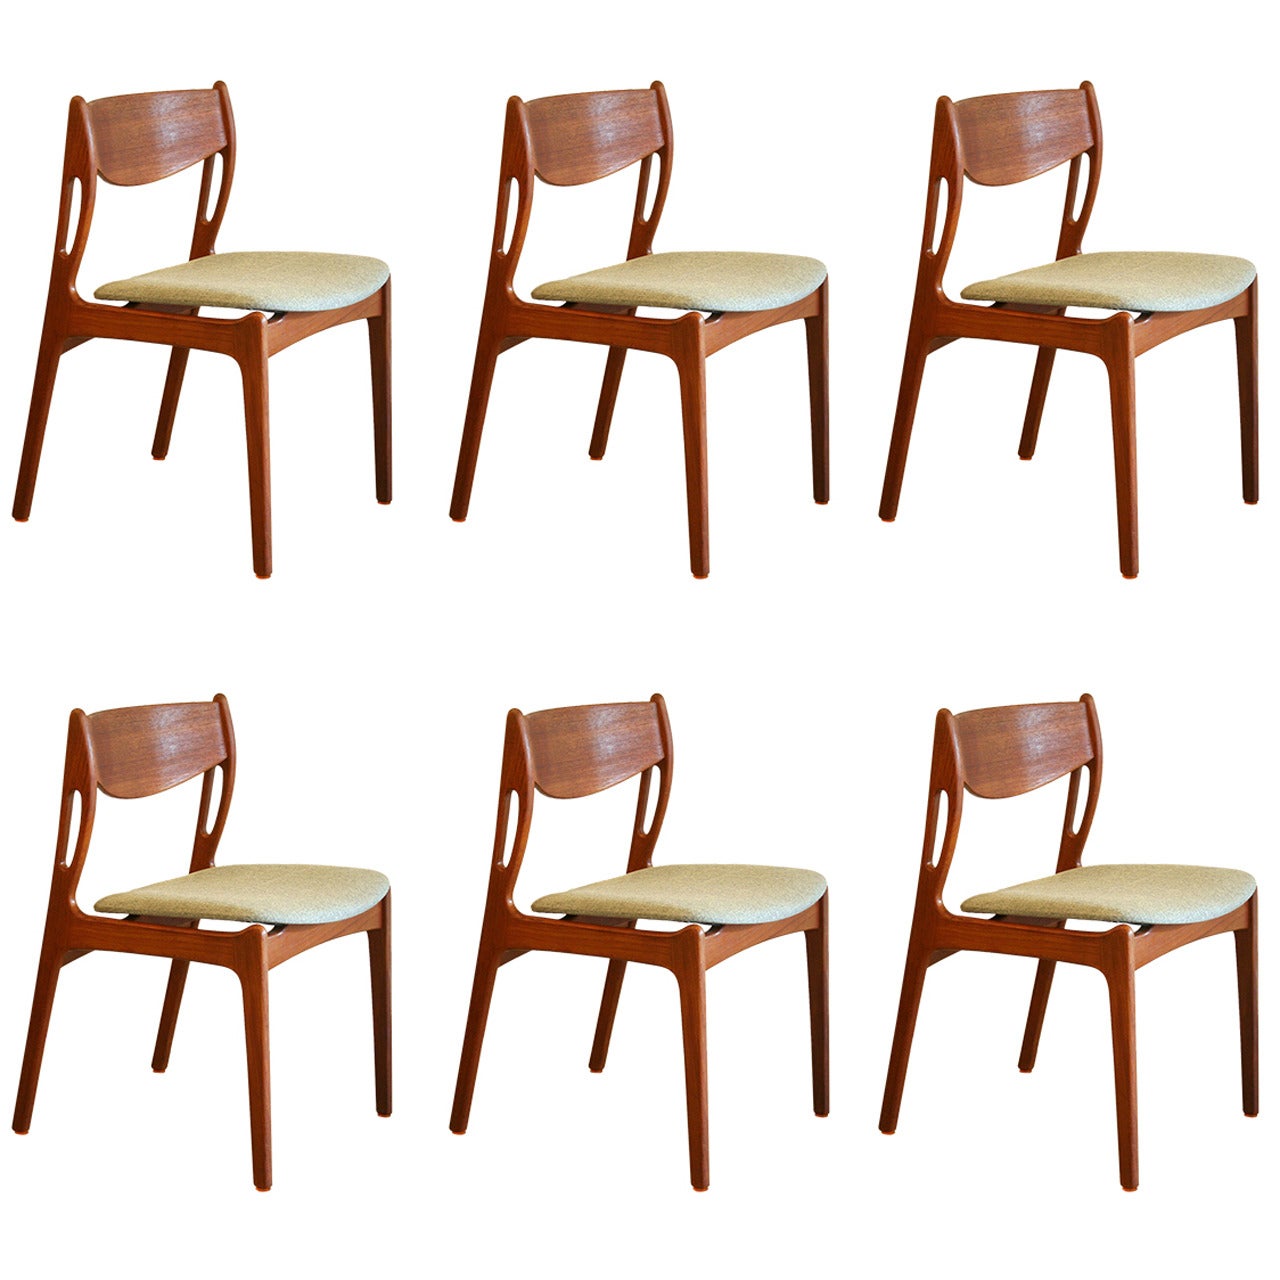 Vintage Danish Teak Dining Chairs - Set of 6